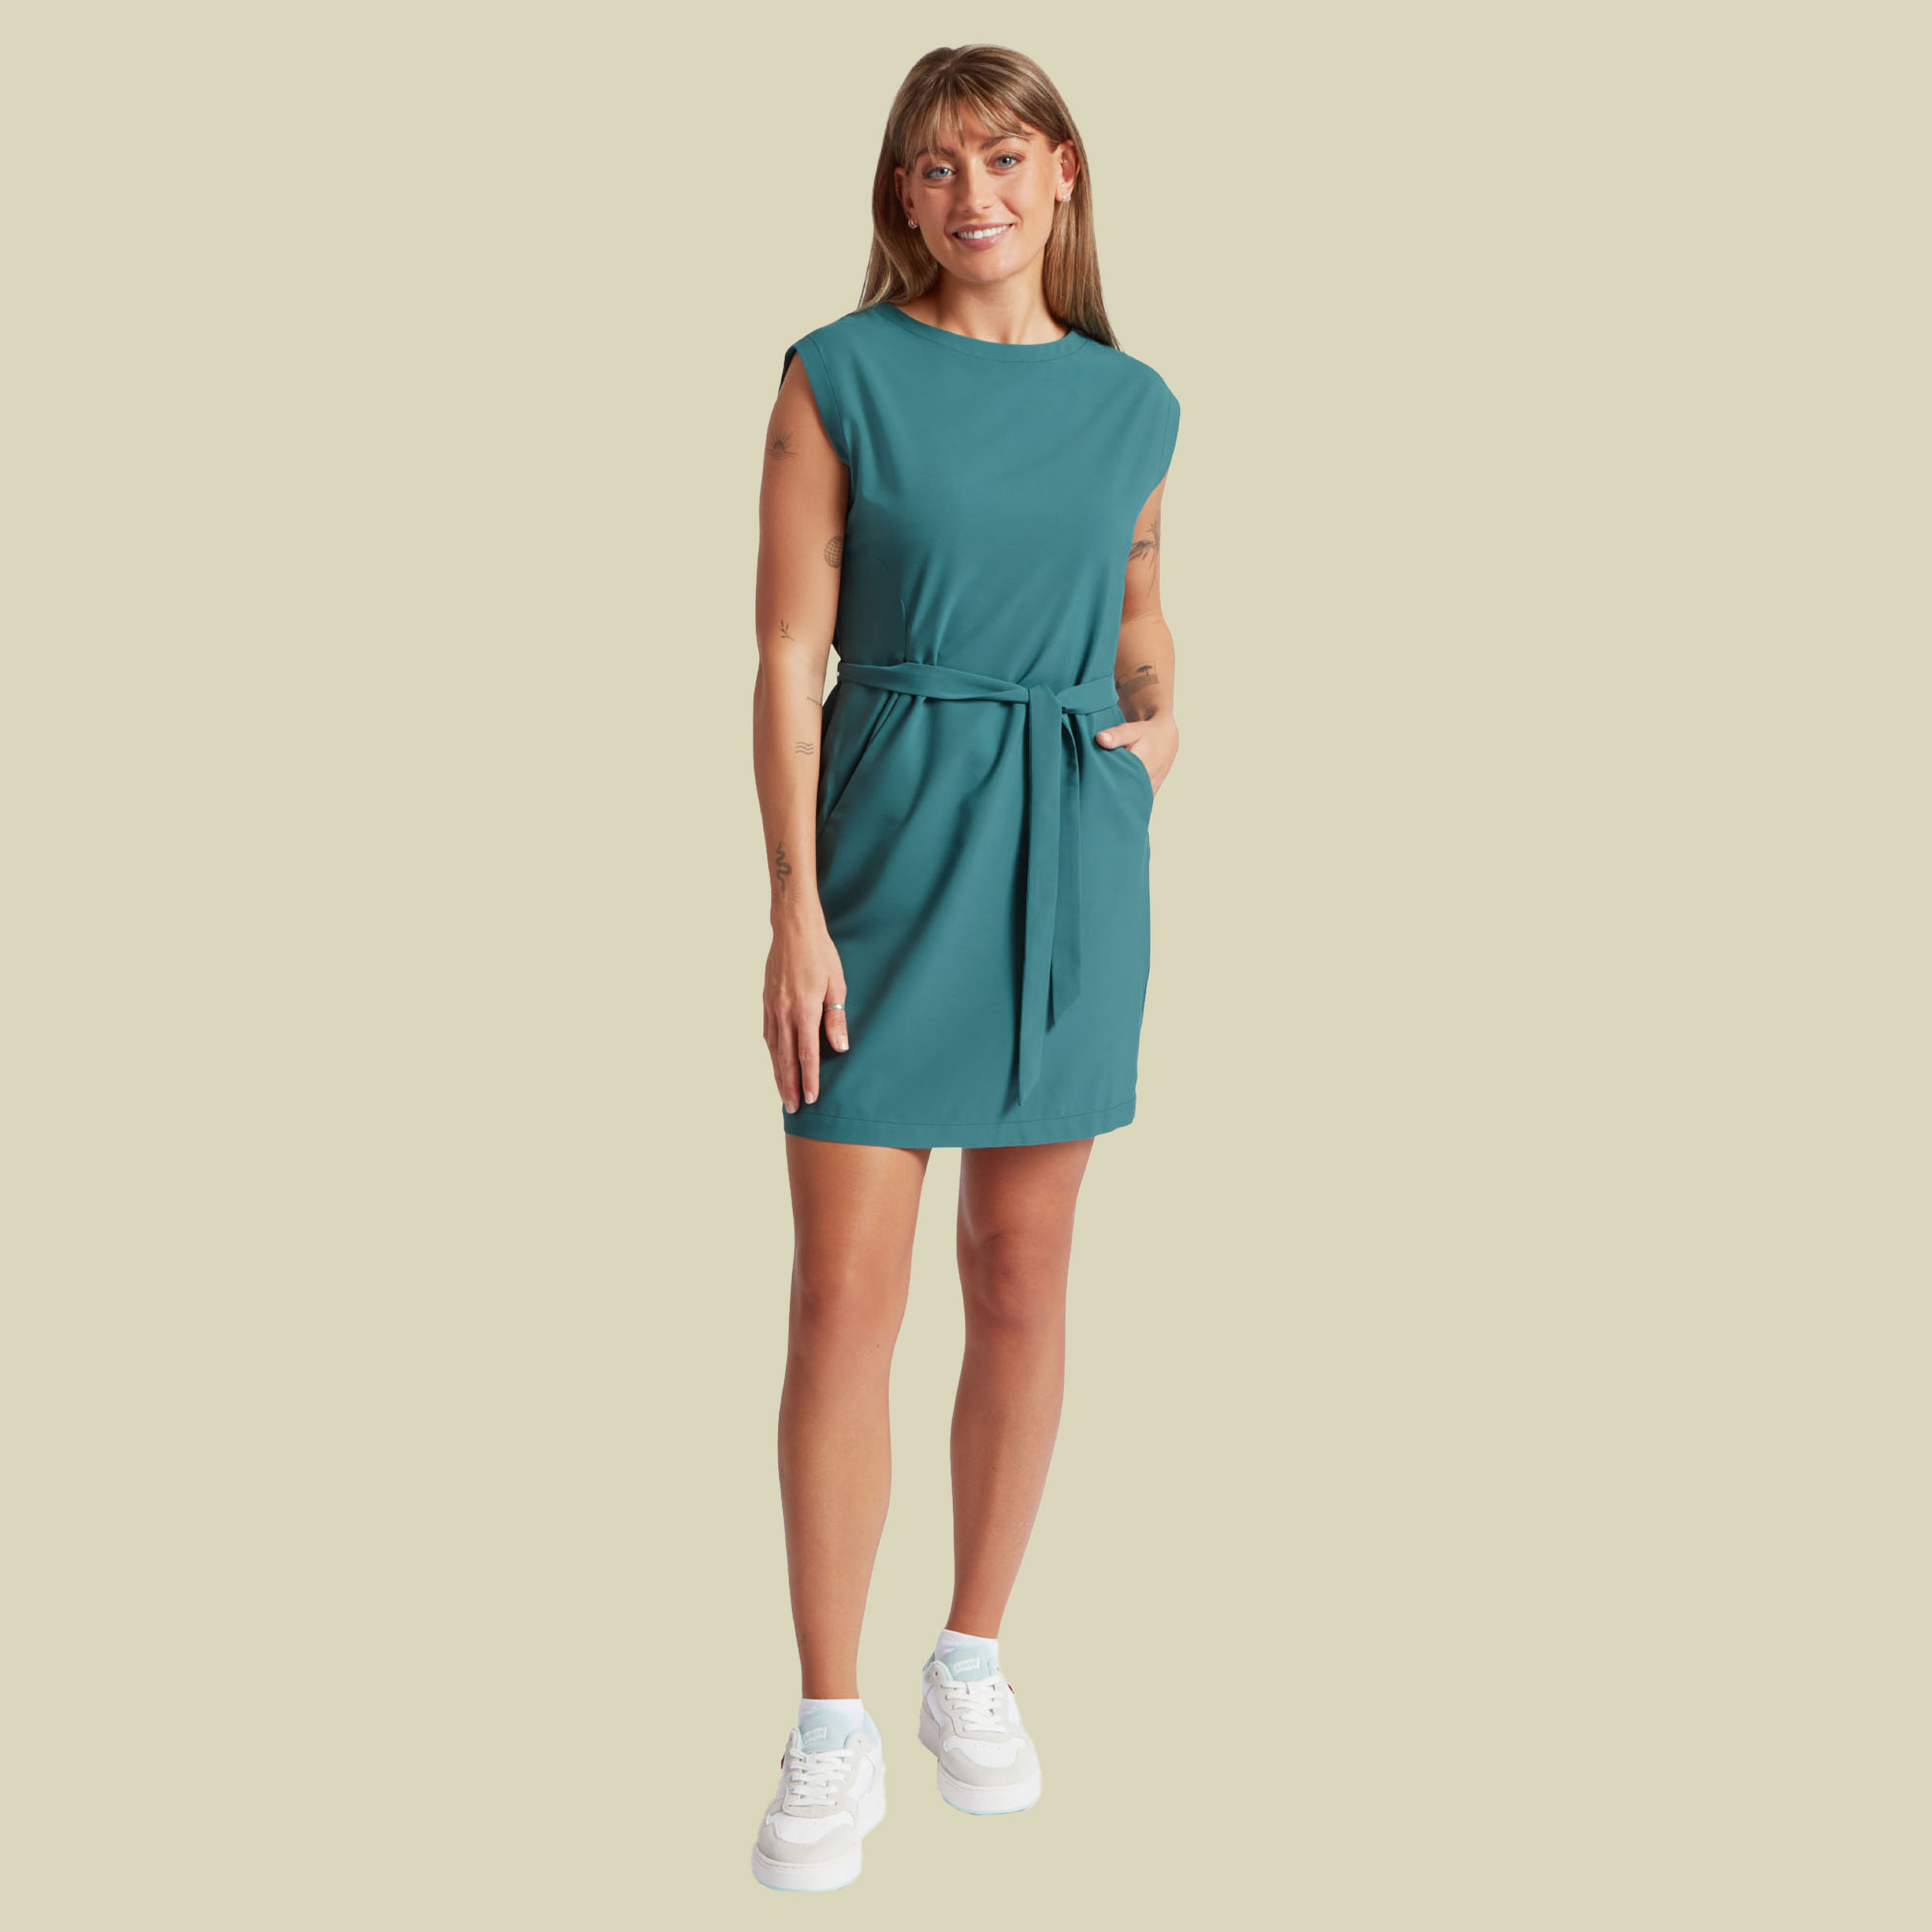 Sajilo Travel Dress S grün - Farbe hydra